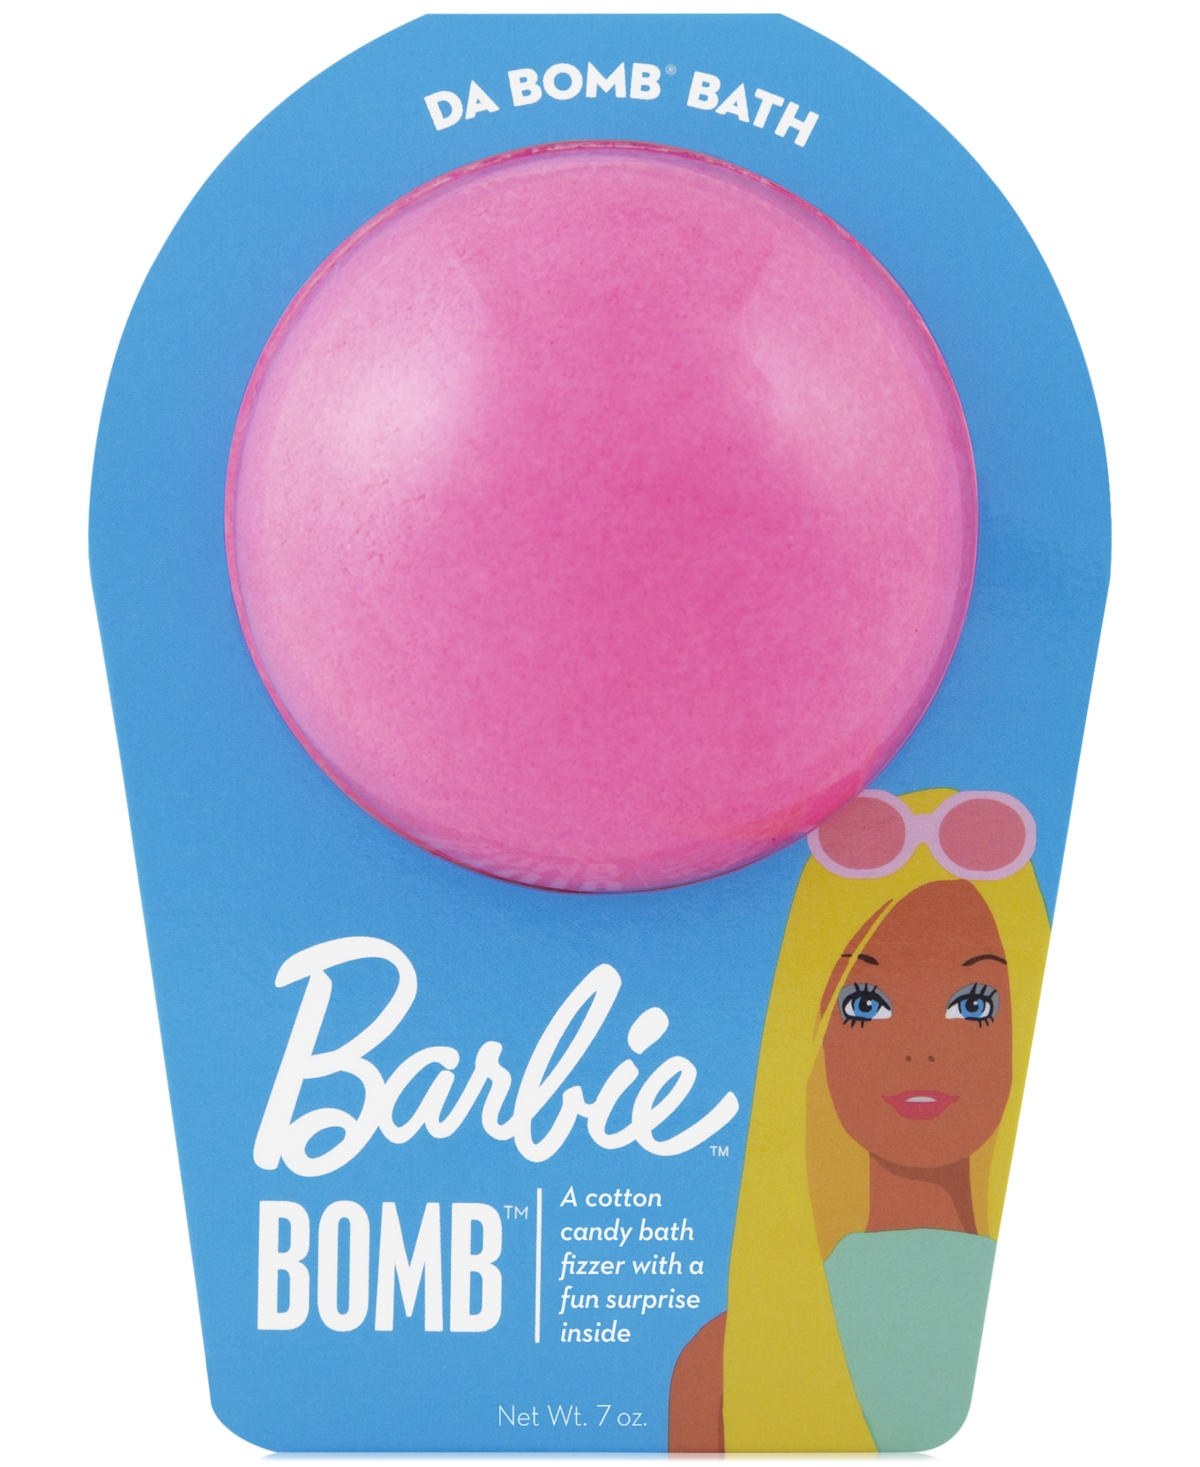 Da Bomb Barbie Bath Bombs, 7-oz